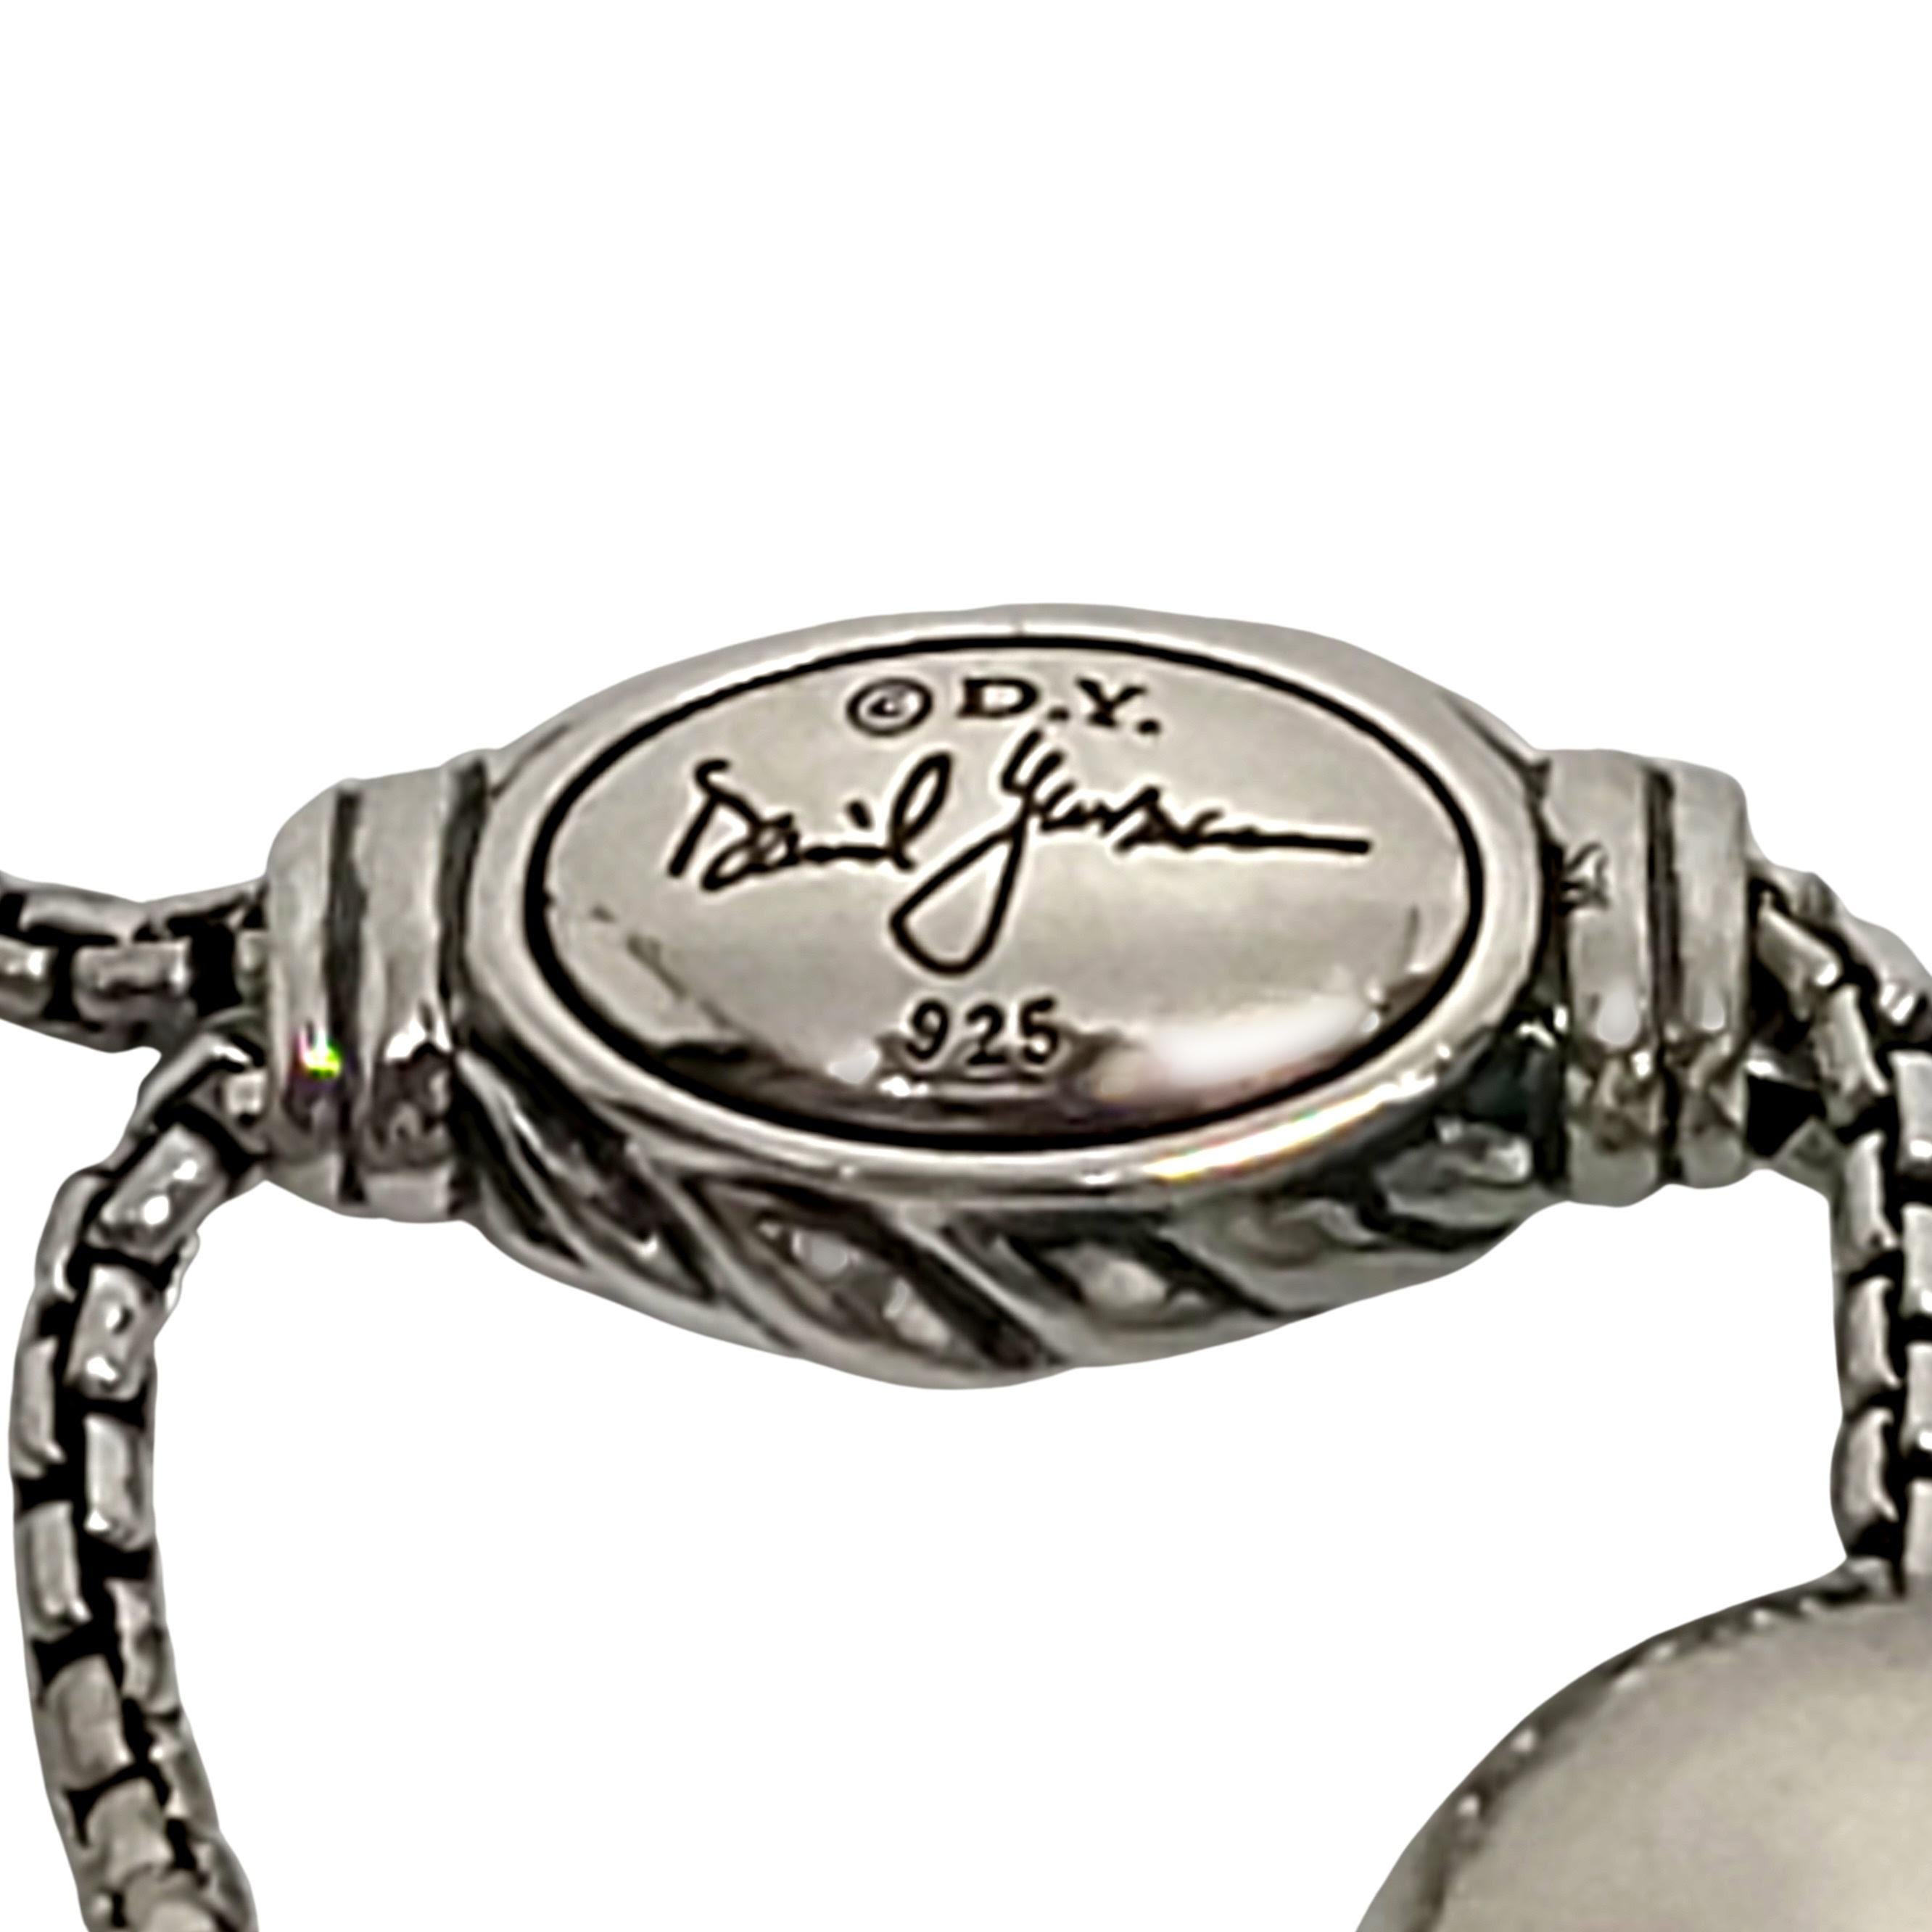 david yurman elements bracelet